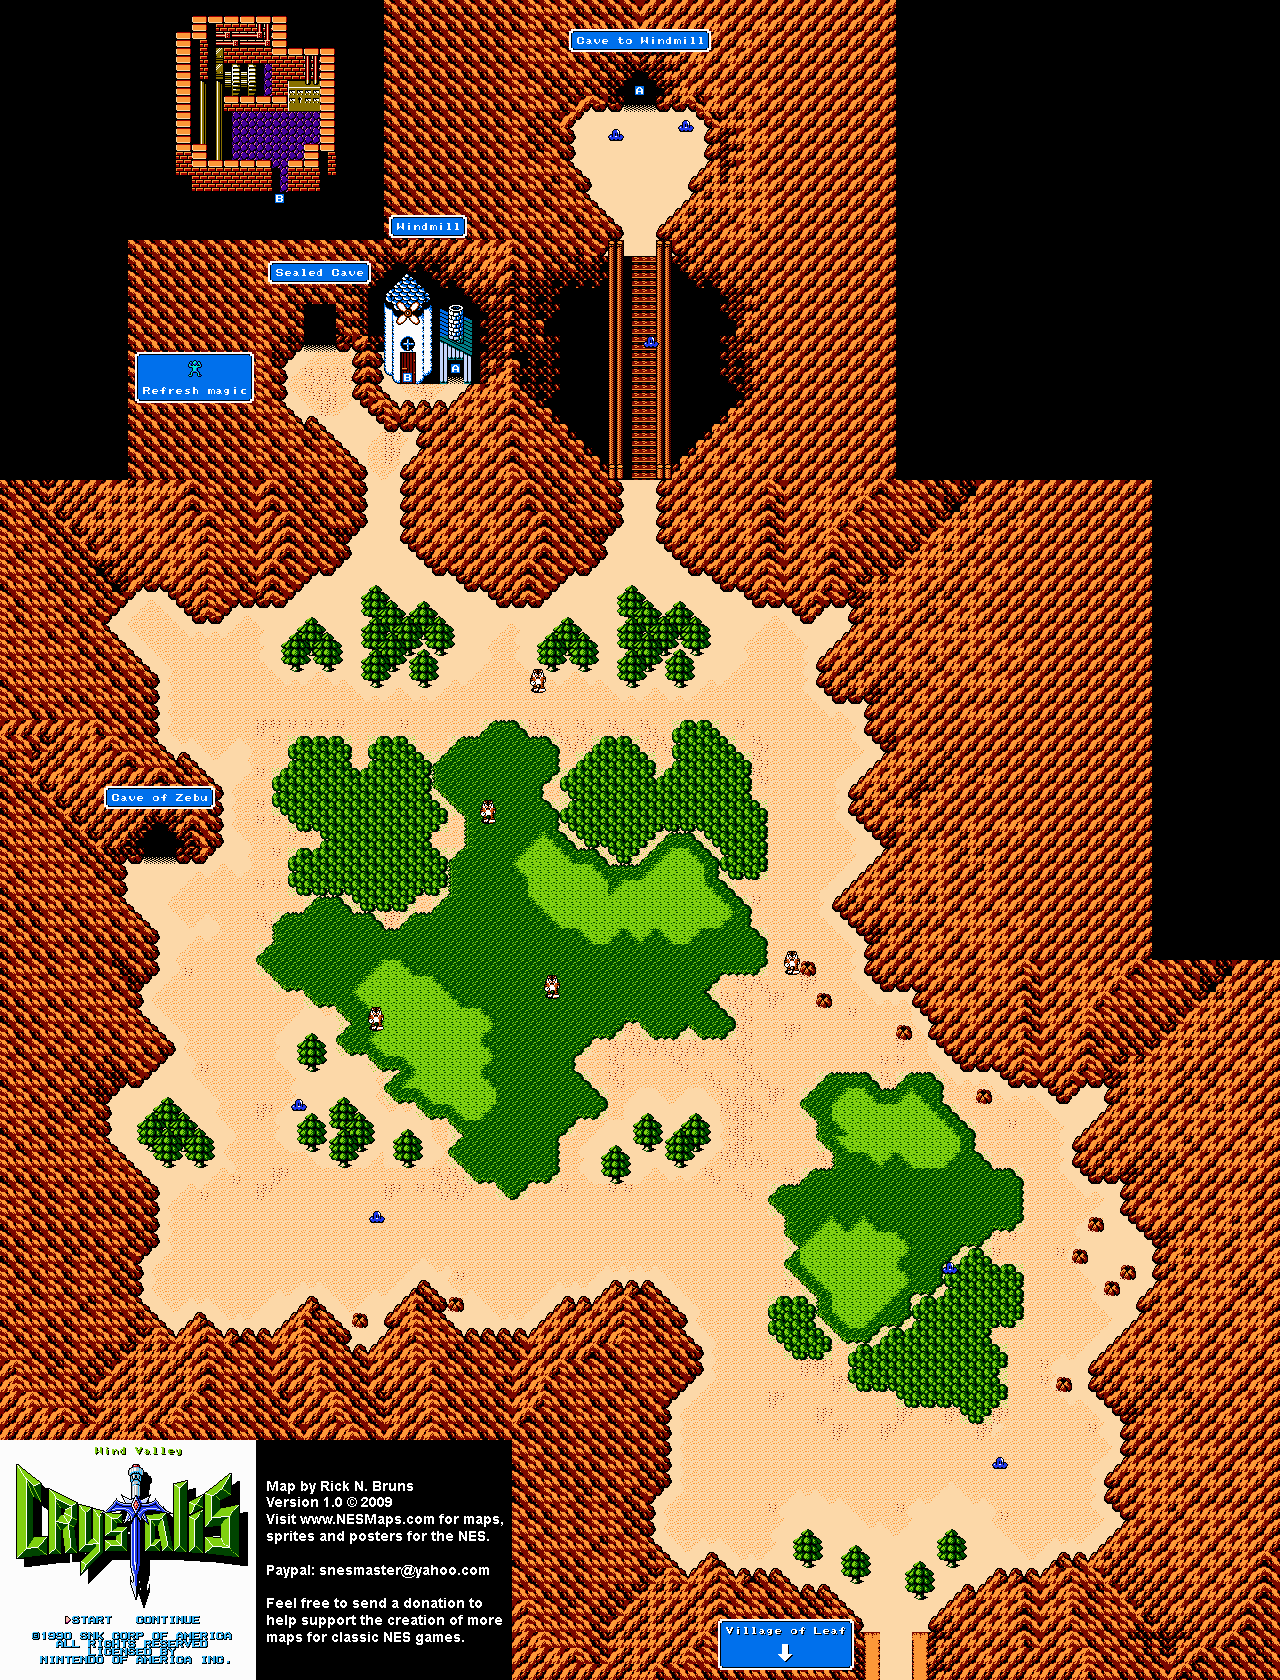 Crystalis - Wind Valley Nintendo NES Map